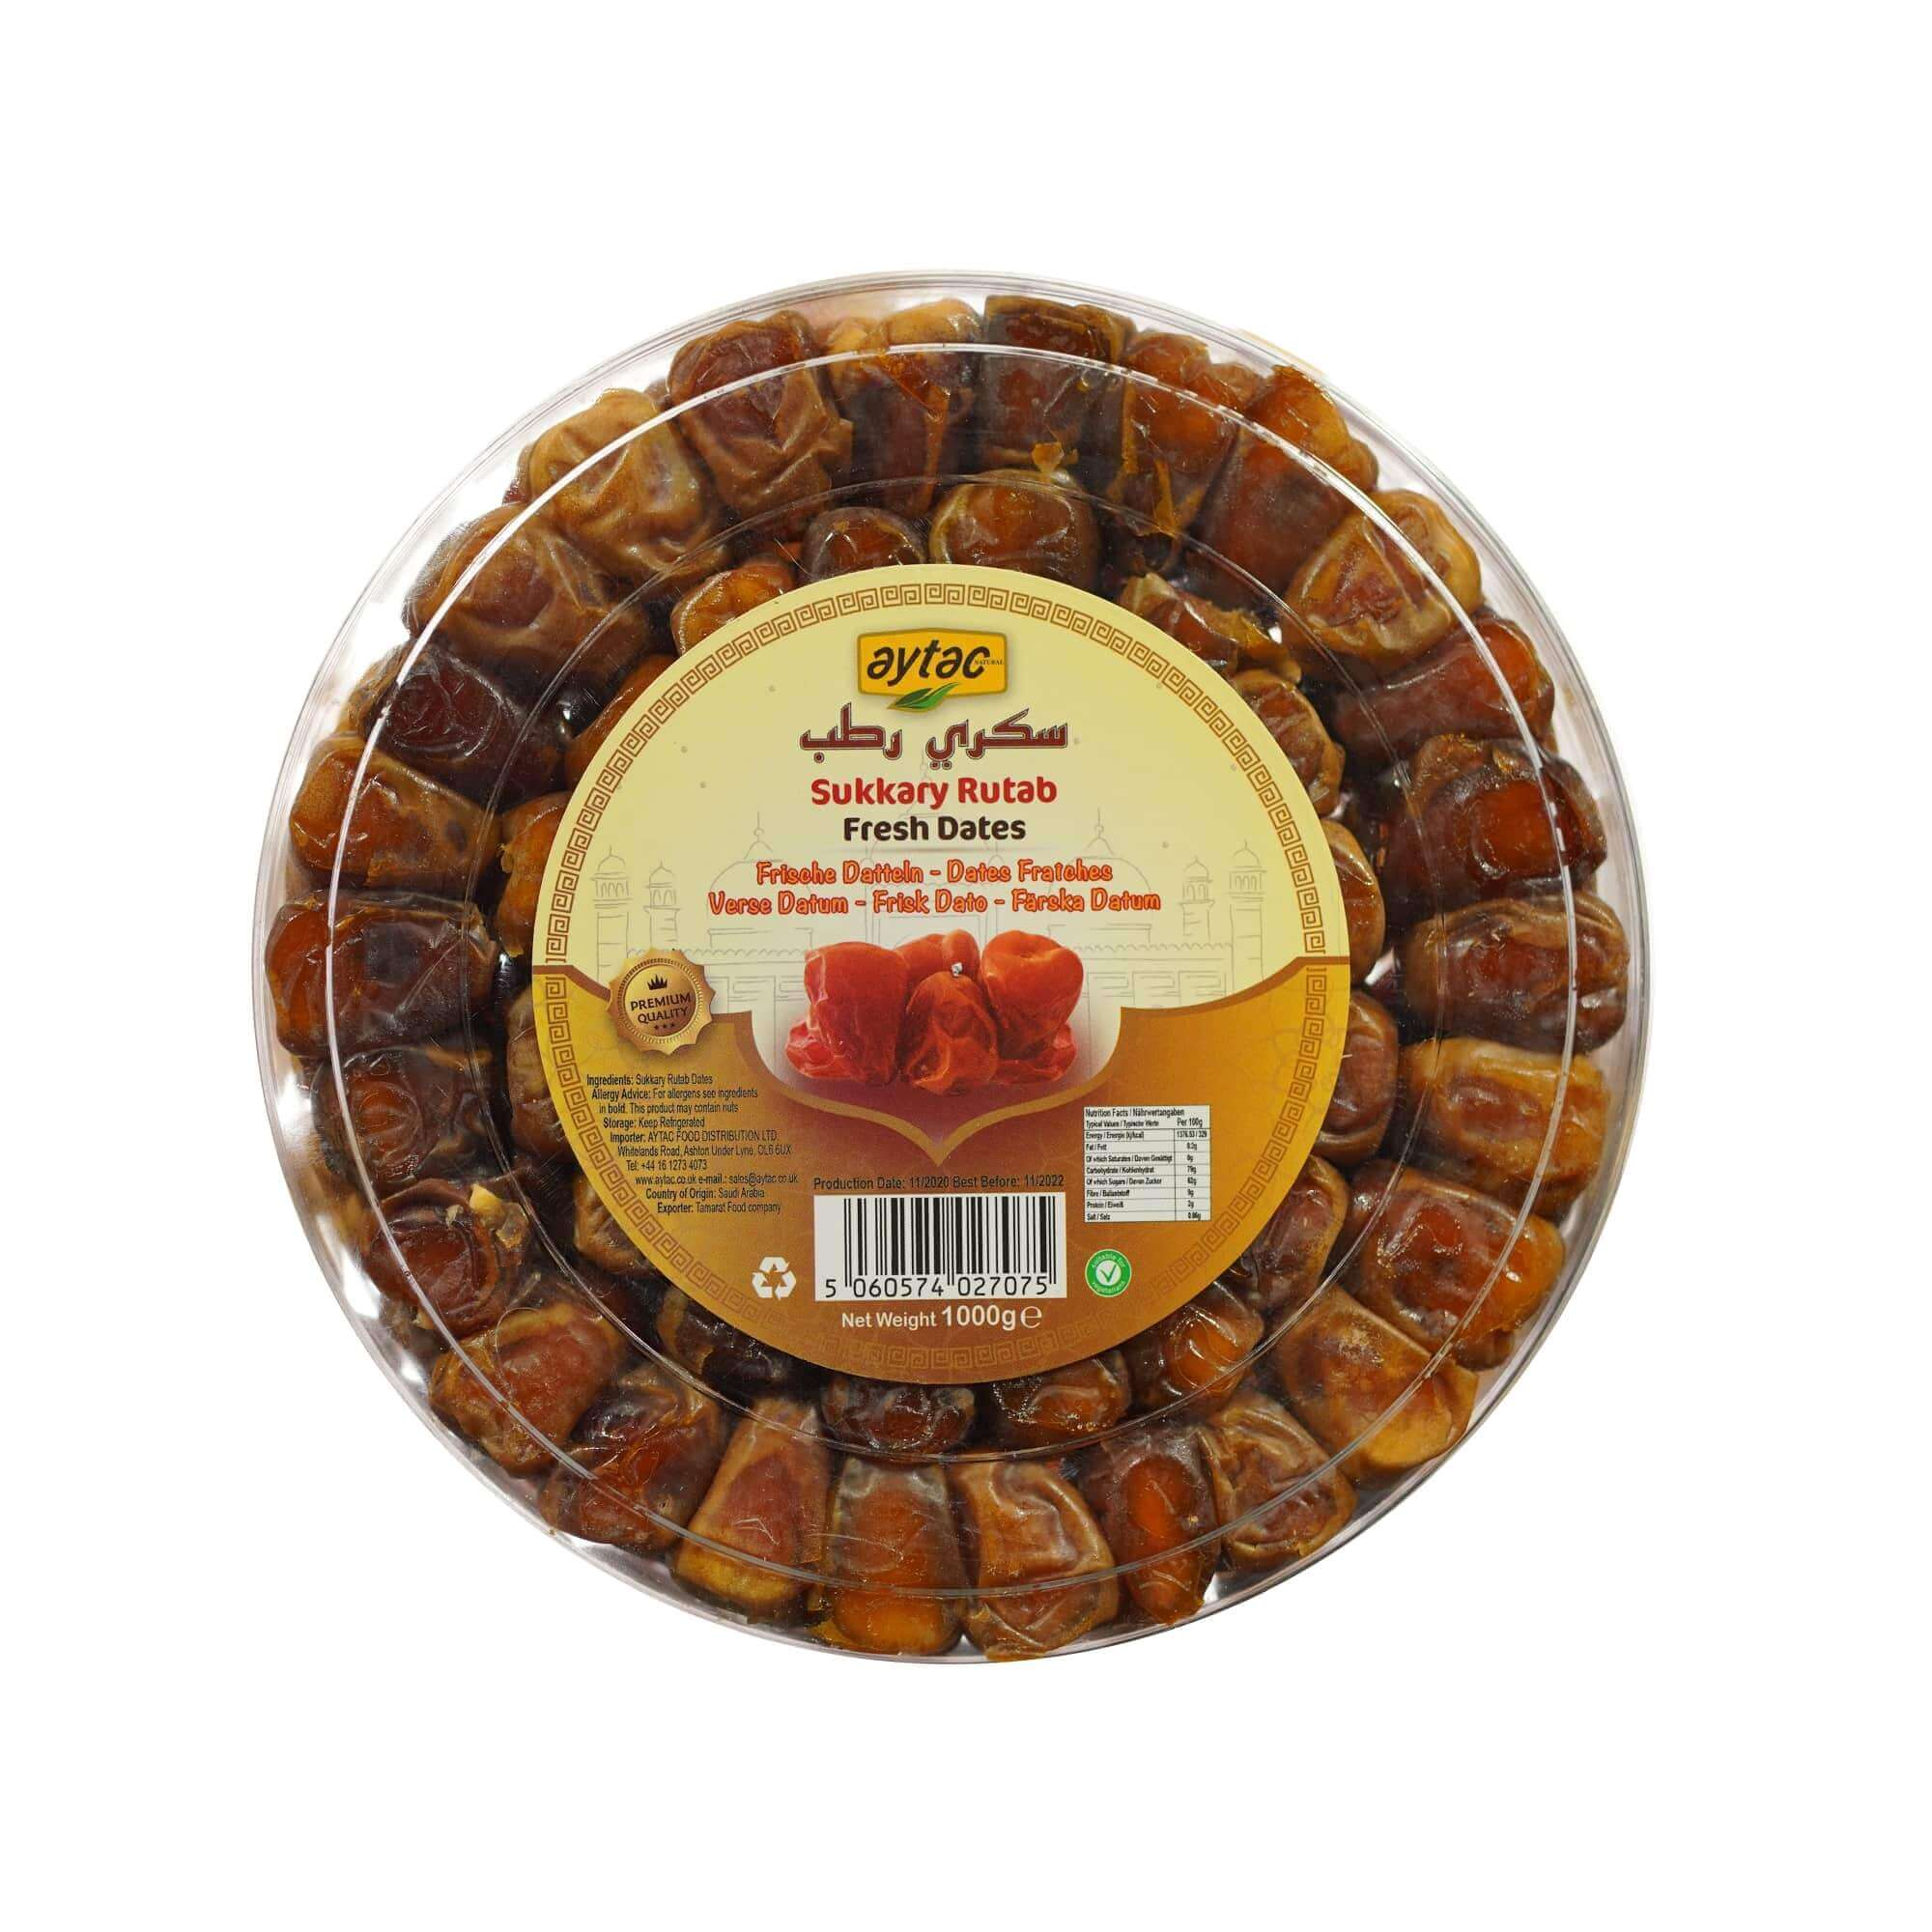 Aytac Sukkary Rutab Fresh Dates Pvc (1KG) - Aytac Foods